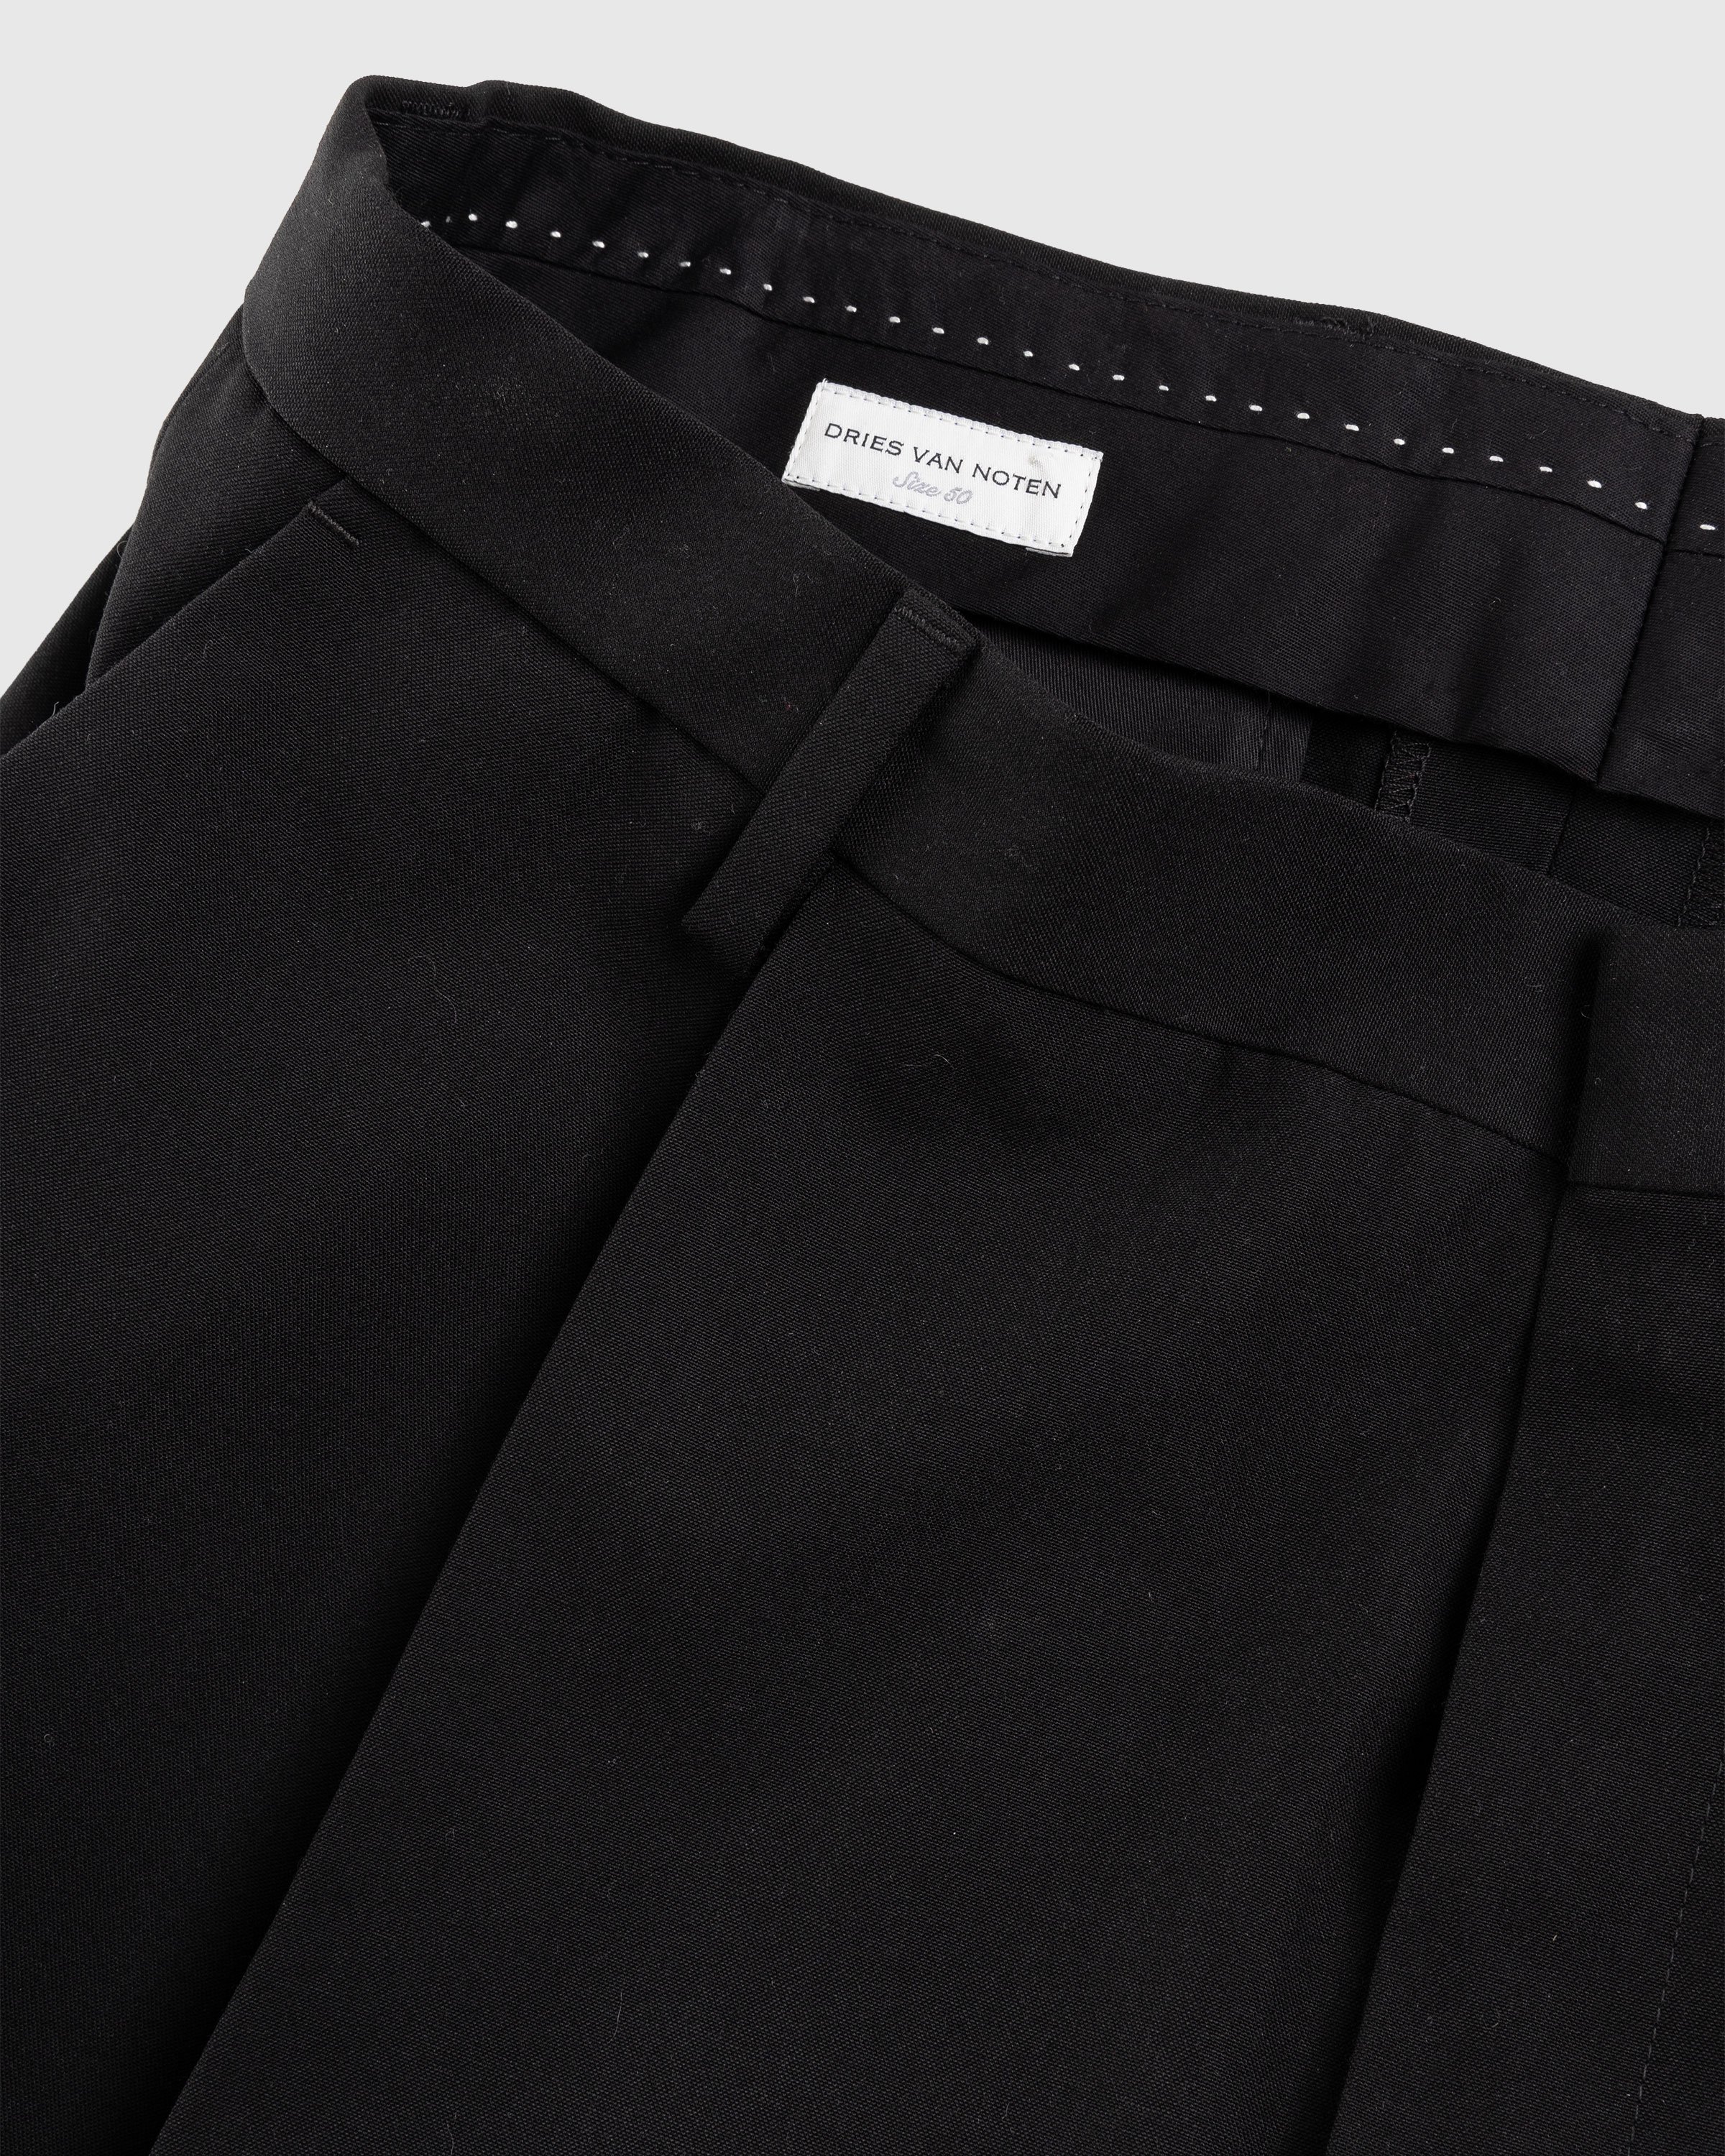 Dries van Noten - Parton Pleated Pants Black - Clothing - Black - Image 4